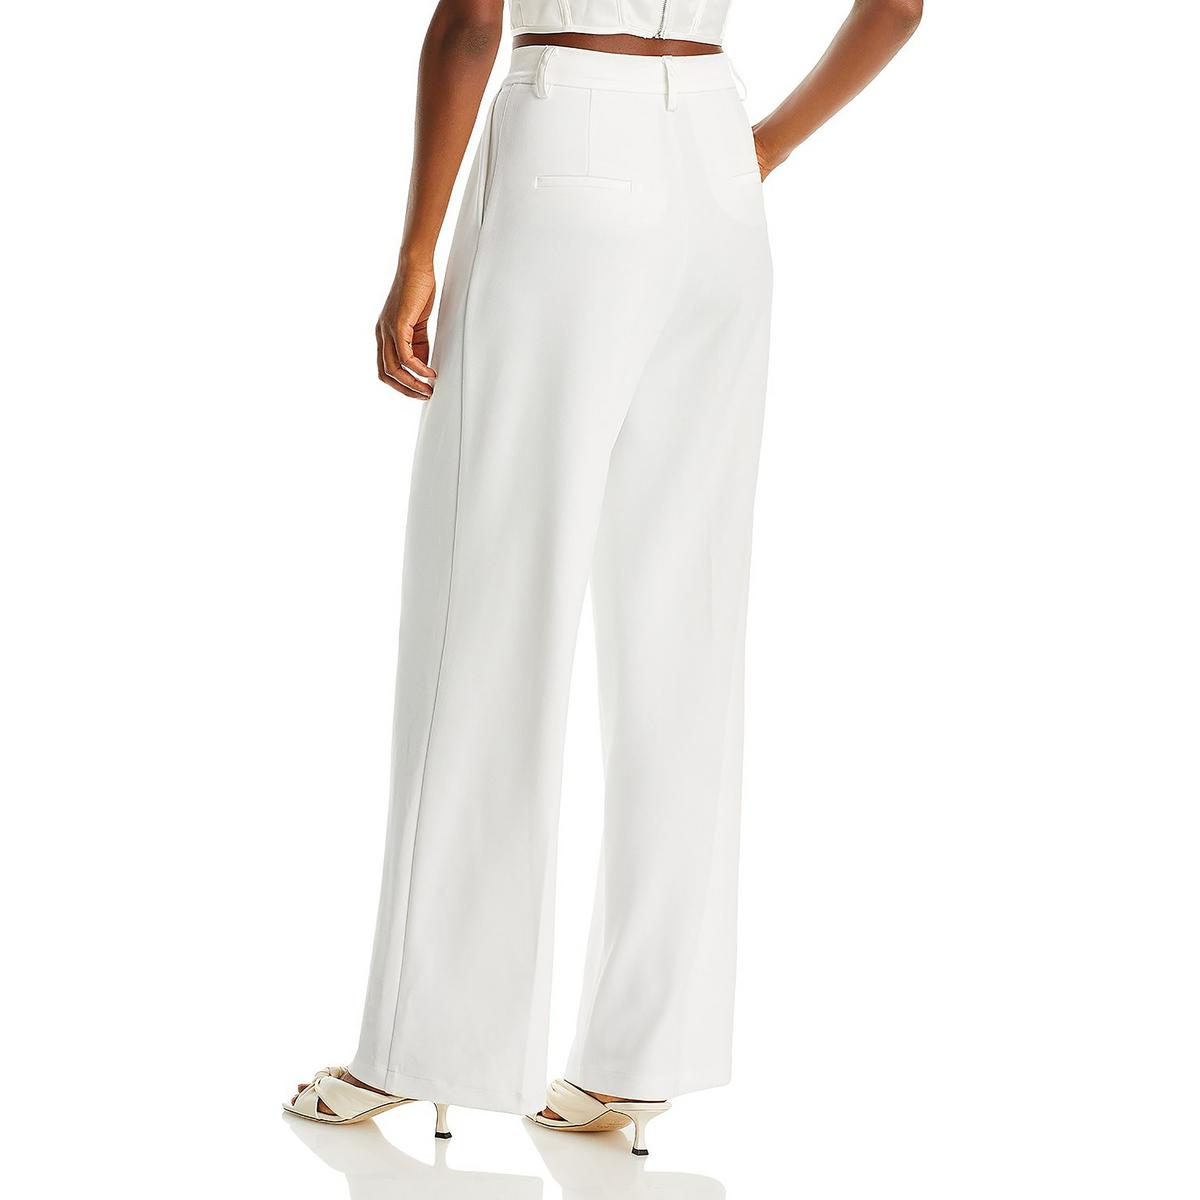 Aqua Womens White Knit Satin Trim Pleated Dress Pants Trousers L